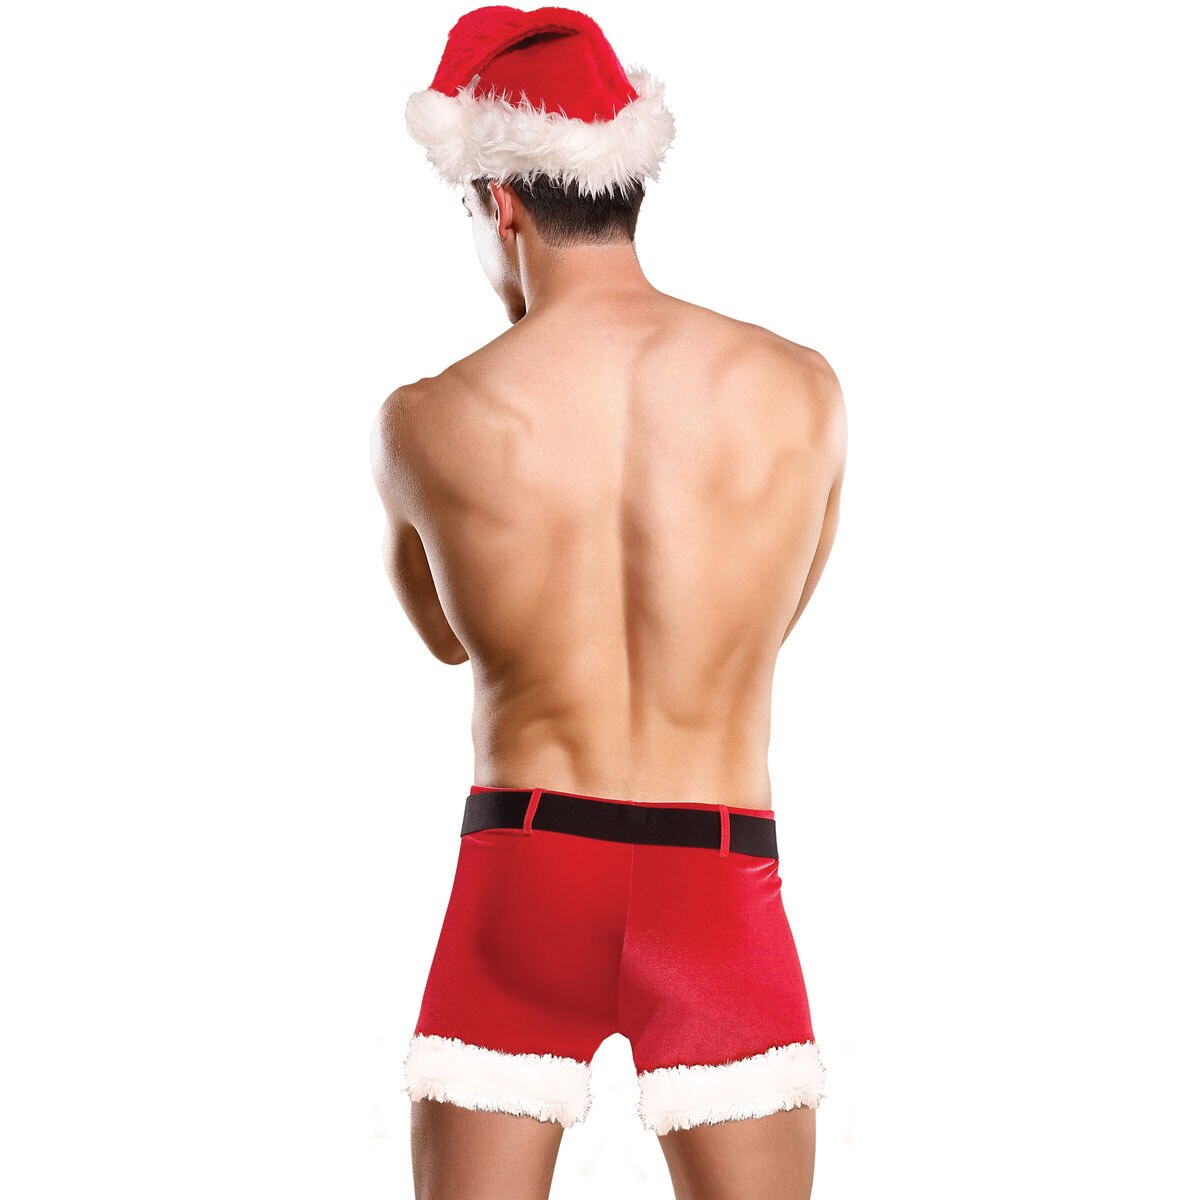 SALE - Mens Christmas Shorts & Hat Costume